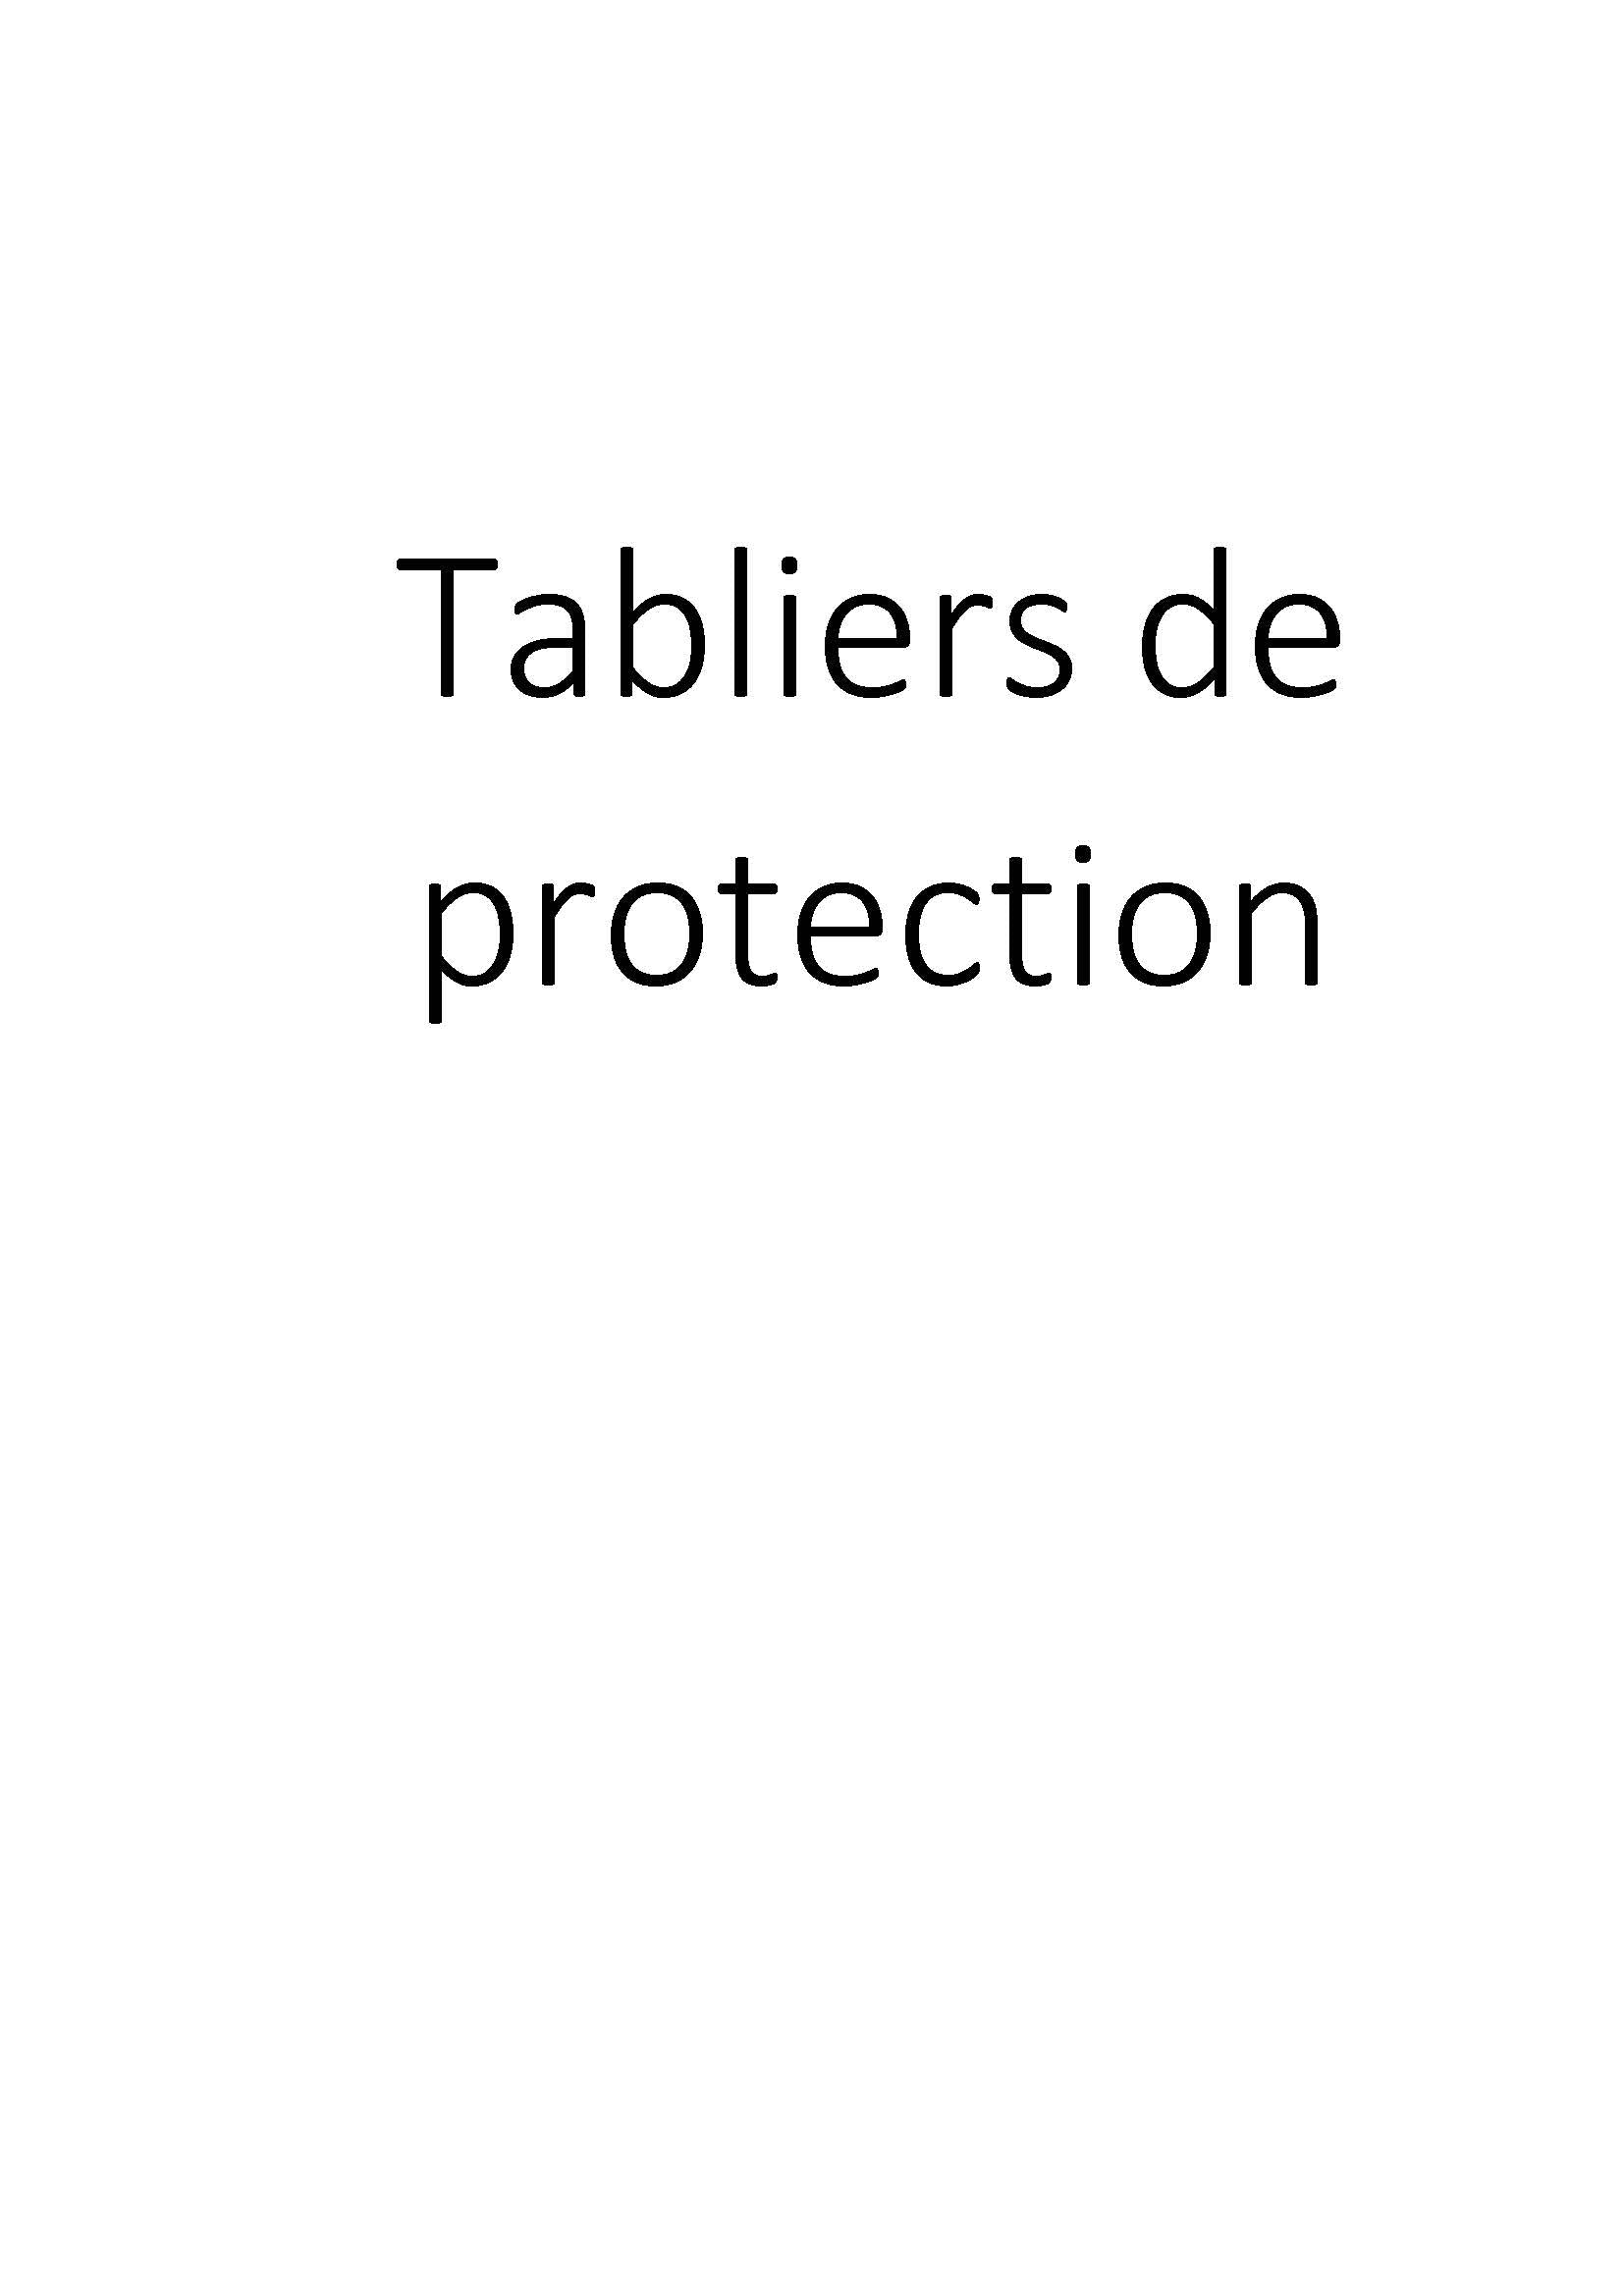 Tabliers de protection clicktofournisseur.com